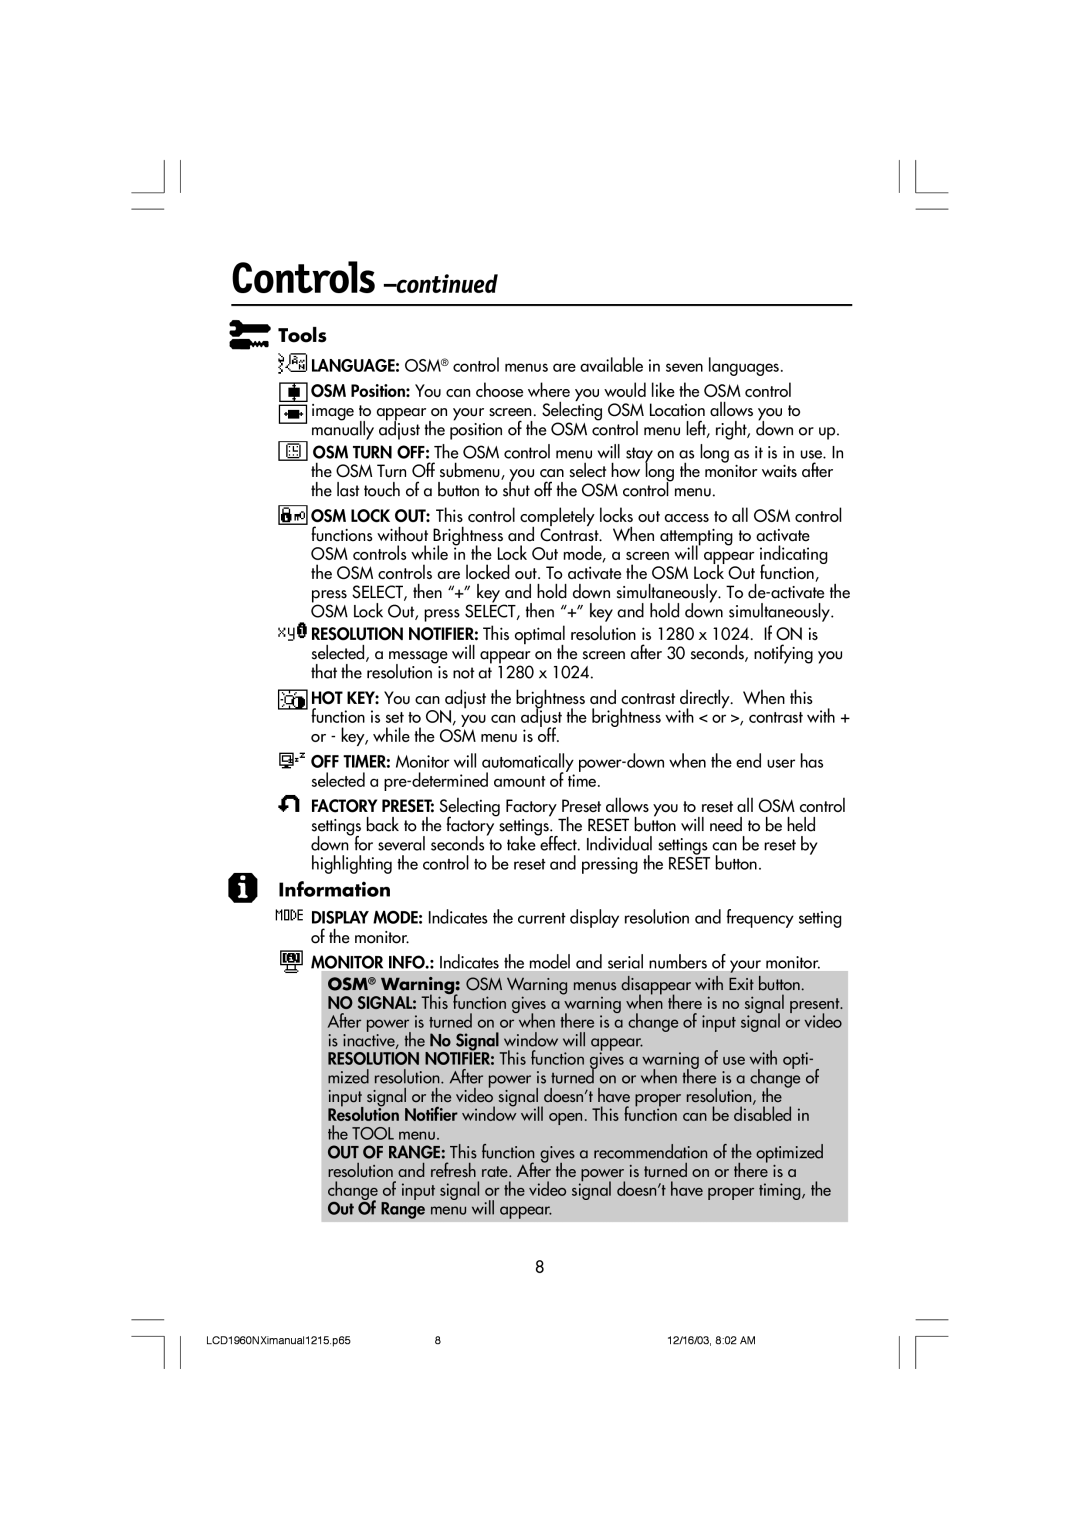 NEC LCD1960NXI manual Controls -continued, Tools, Information 